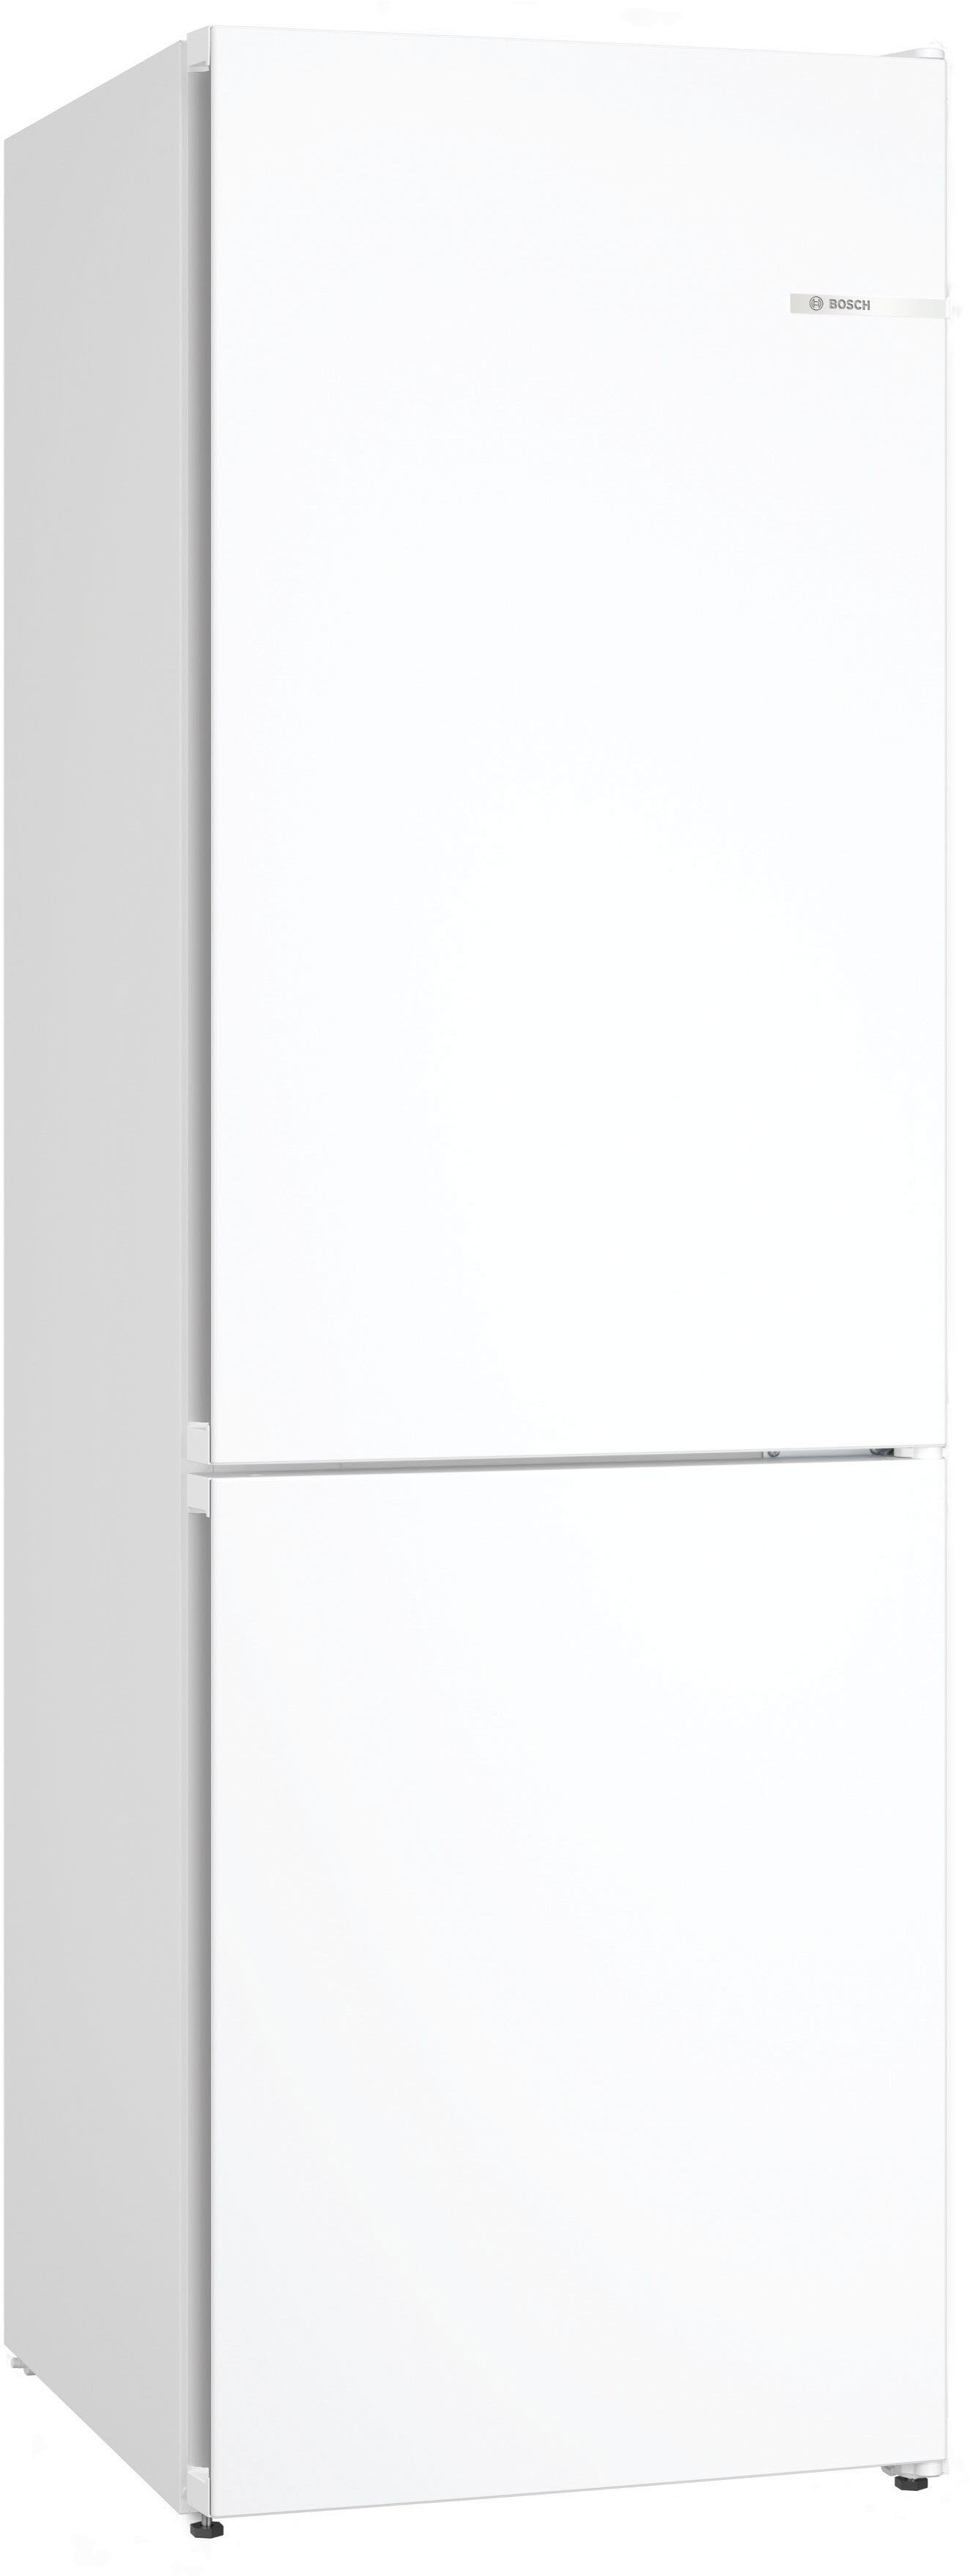 BOSCH Kühl-/Gefrierkombination, KGN362WDF, 186 cm hoch, 60 breit D (A bis G) weiß Kühl-/Gefrierkombination Kühl-Gefrierkombinationen Kühlschränke Haushaltsgeräte